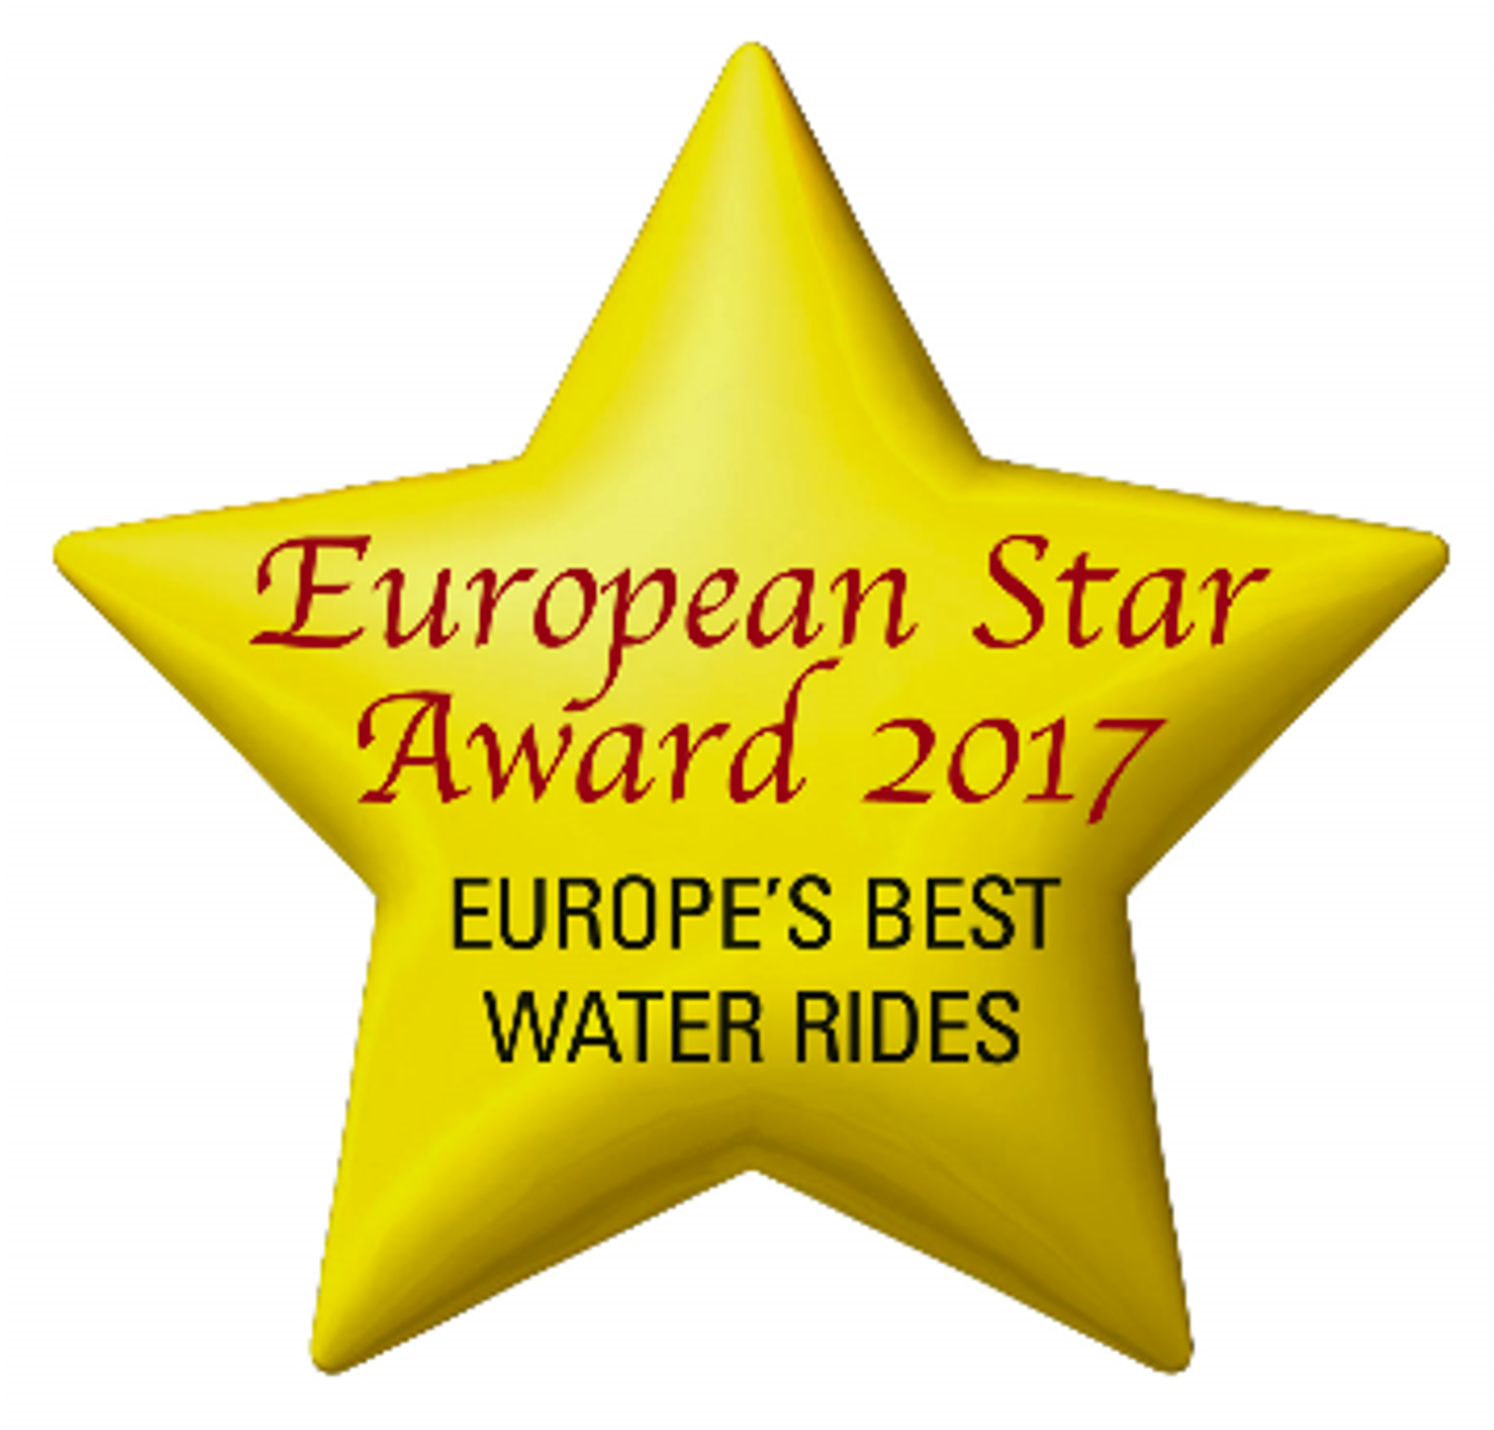 Interlink Kirmes Award 2017 - Europes Best Water Rides